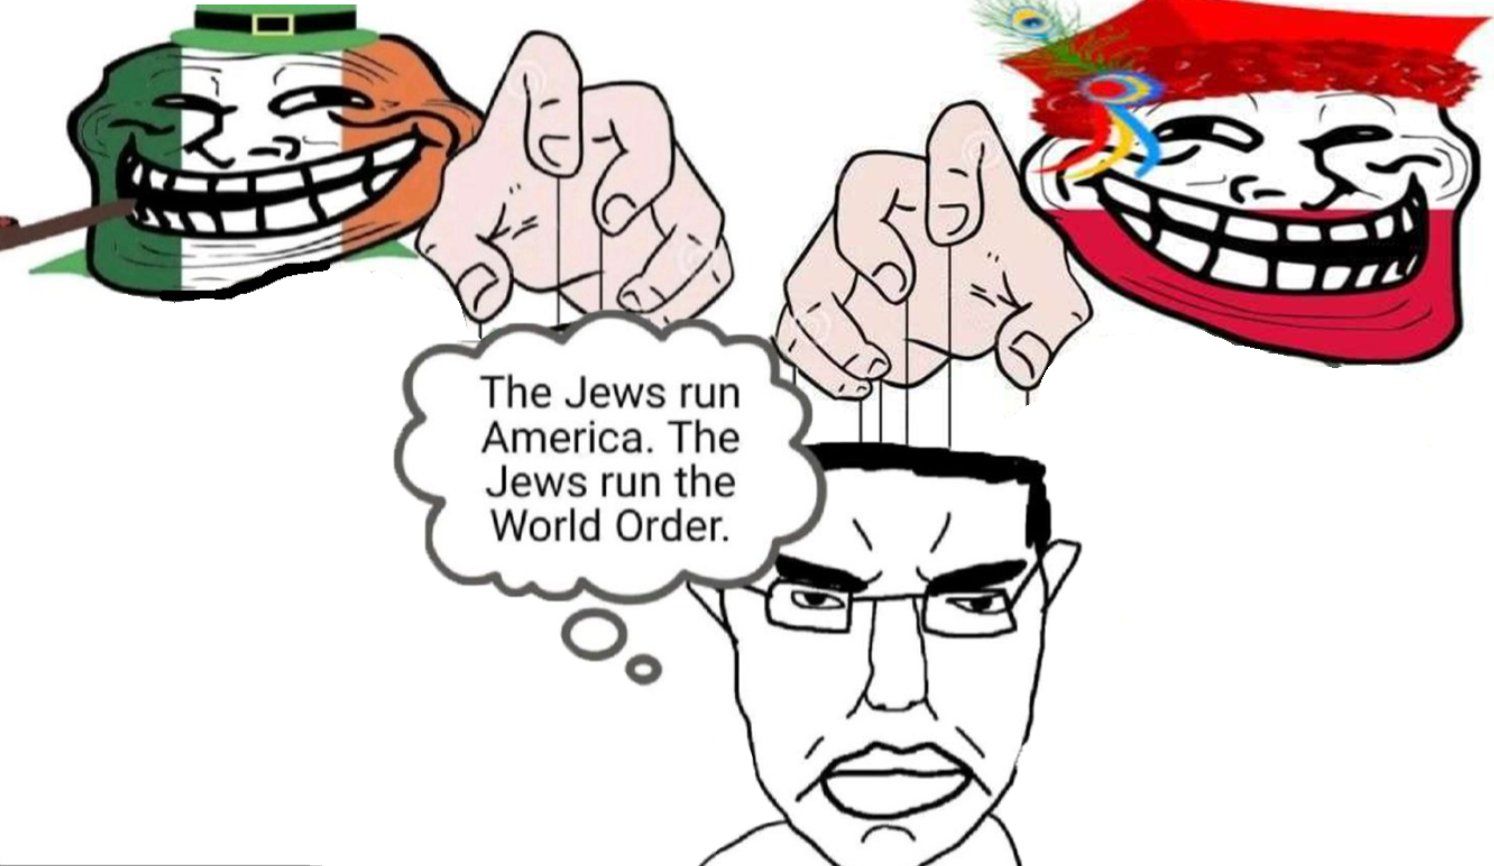 The Jews run
America. The
Jews run the
World Order.